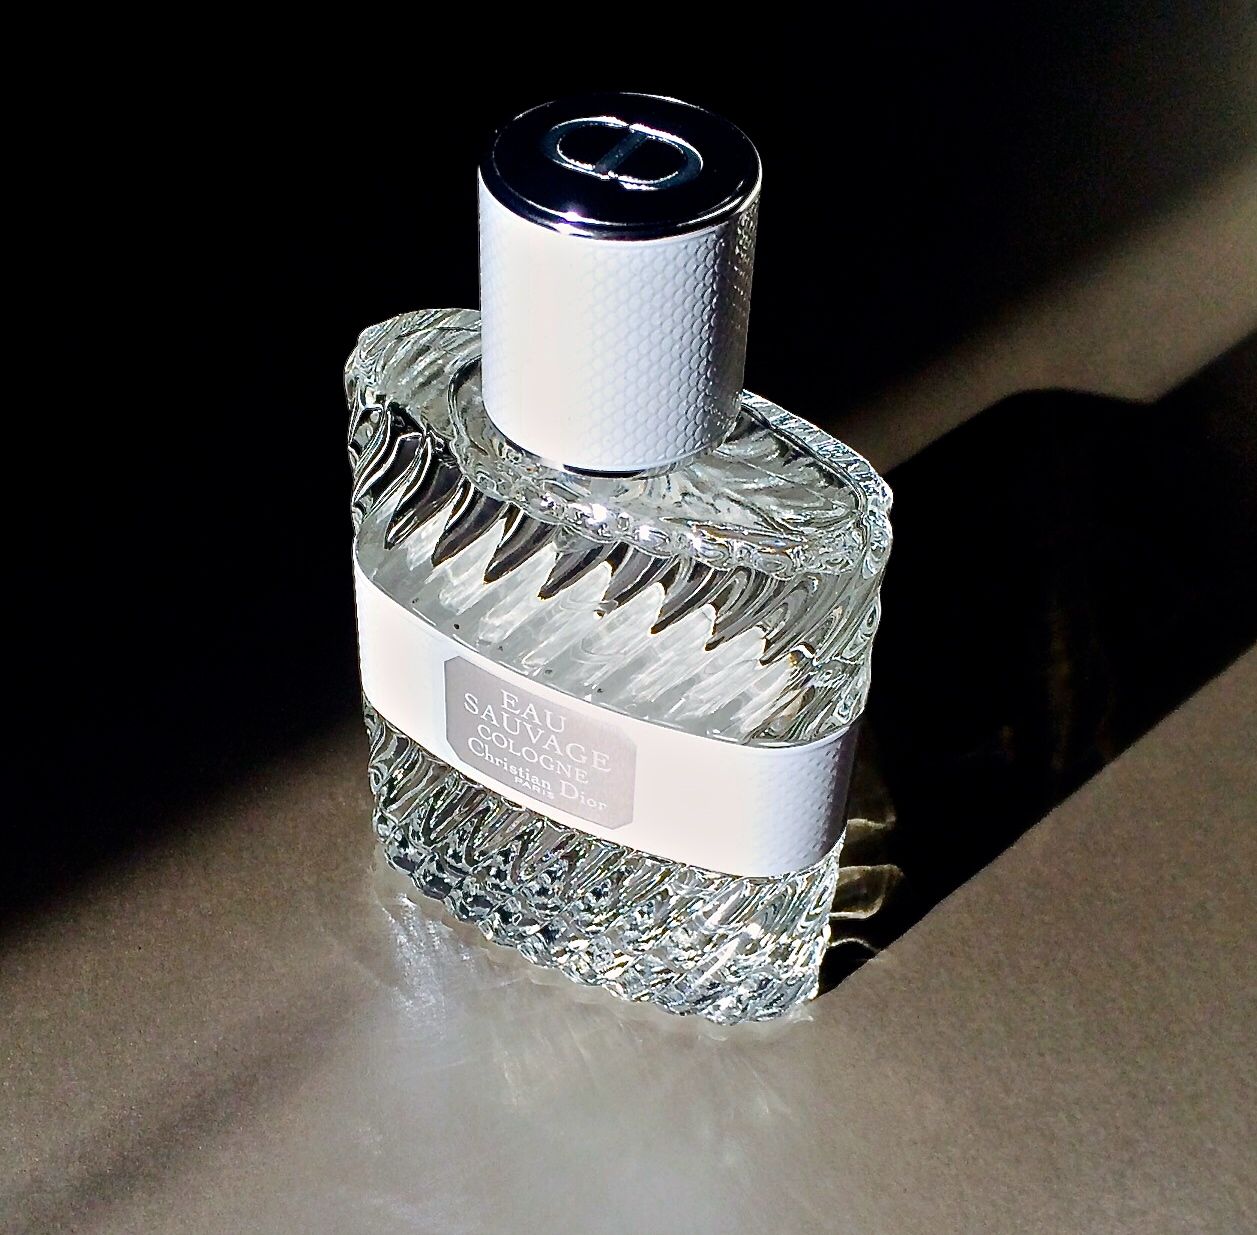 Dior Eau Sauvage Parfum Review: Another Discontinued Gem